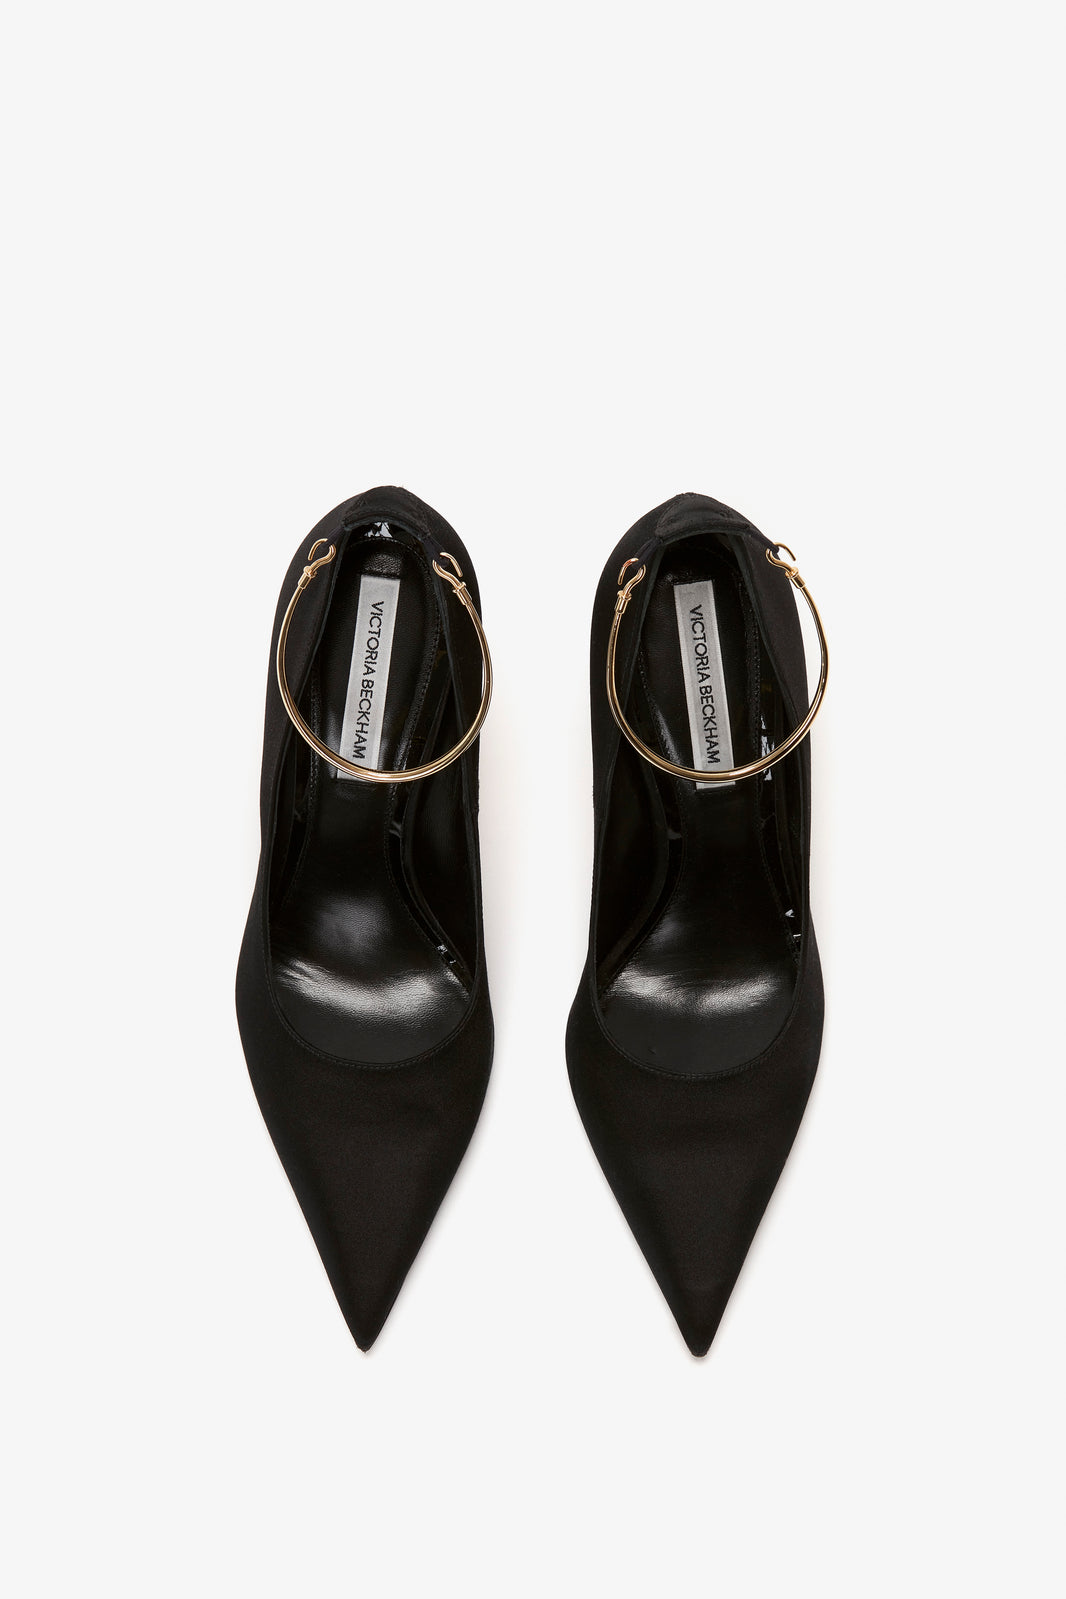 Designer Sandals, Heels, Boots Shoes – Victoria Beckham UK